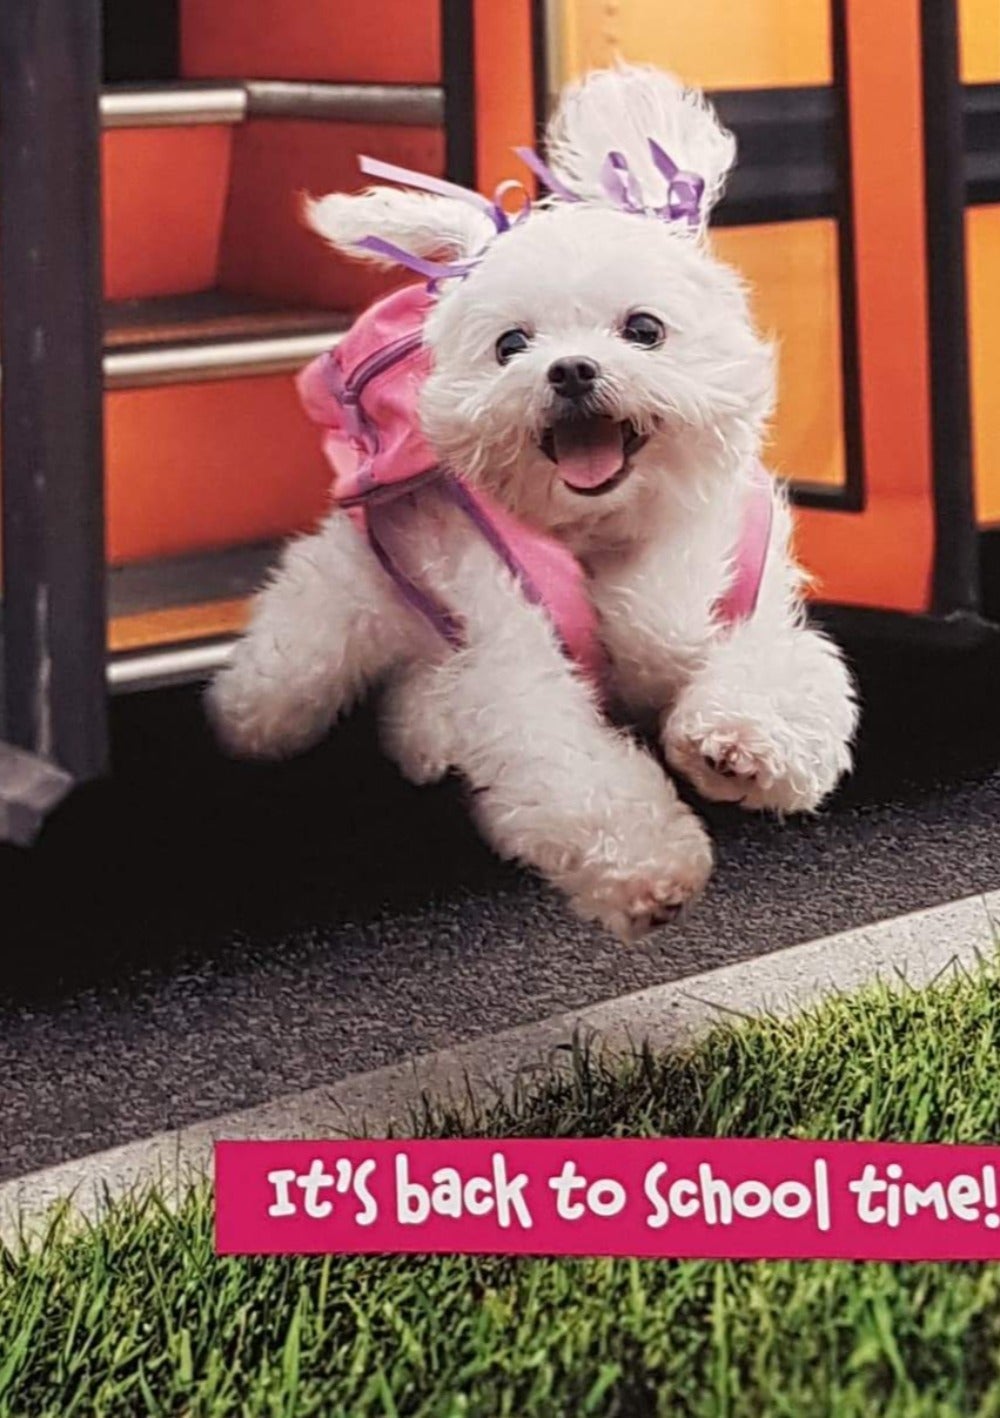 New School Card - Cute Dog Wearing Pink Backpack